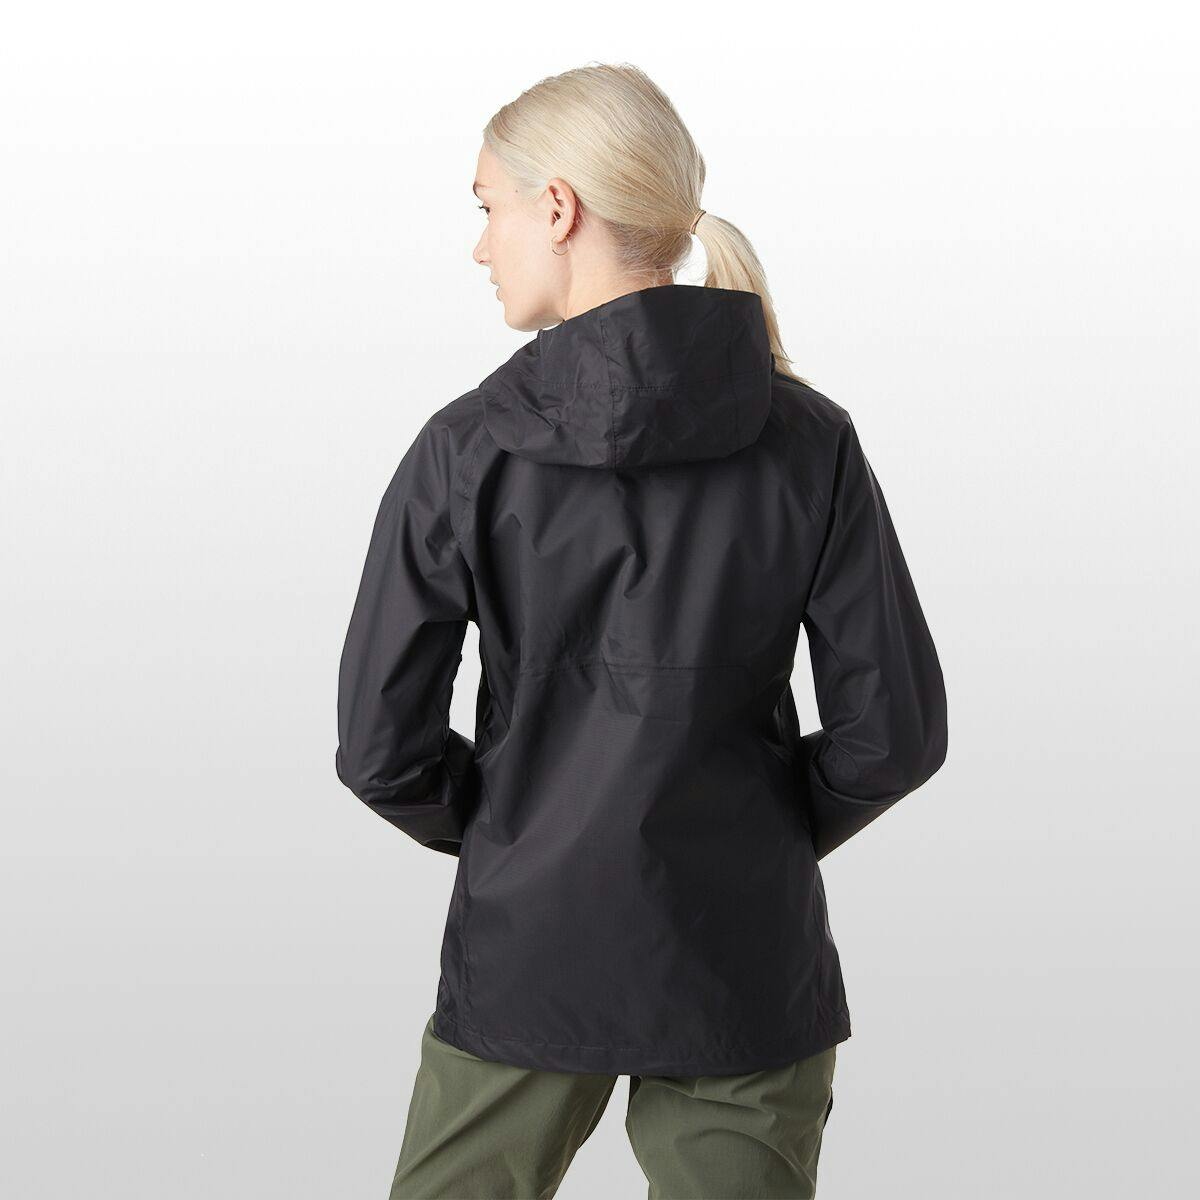 Outdoor Research Women's Apollo Rain Jacket